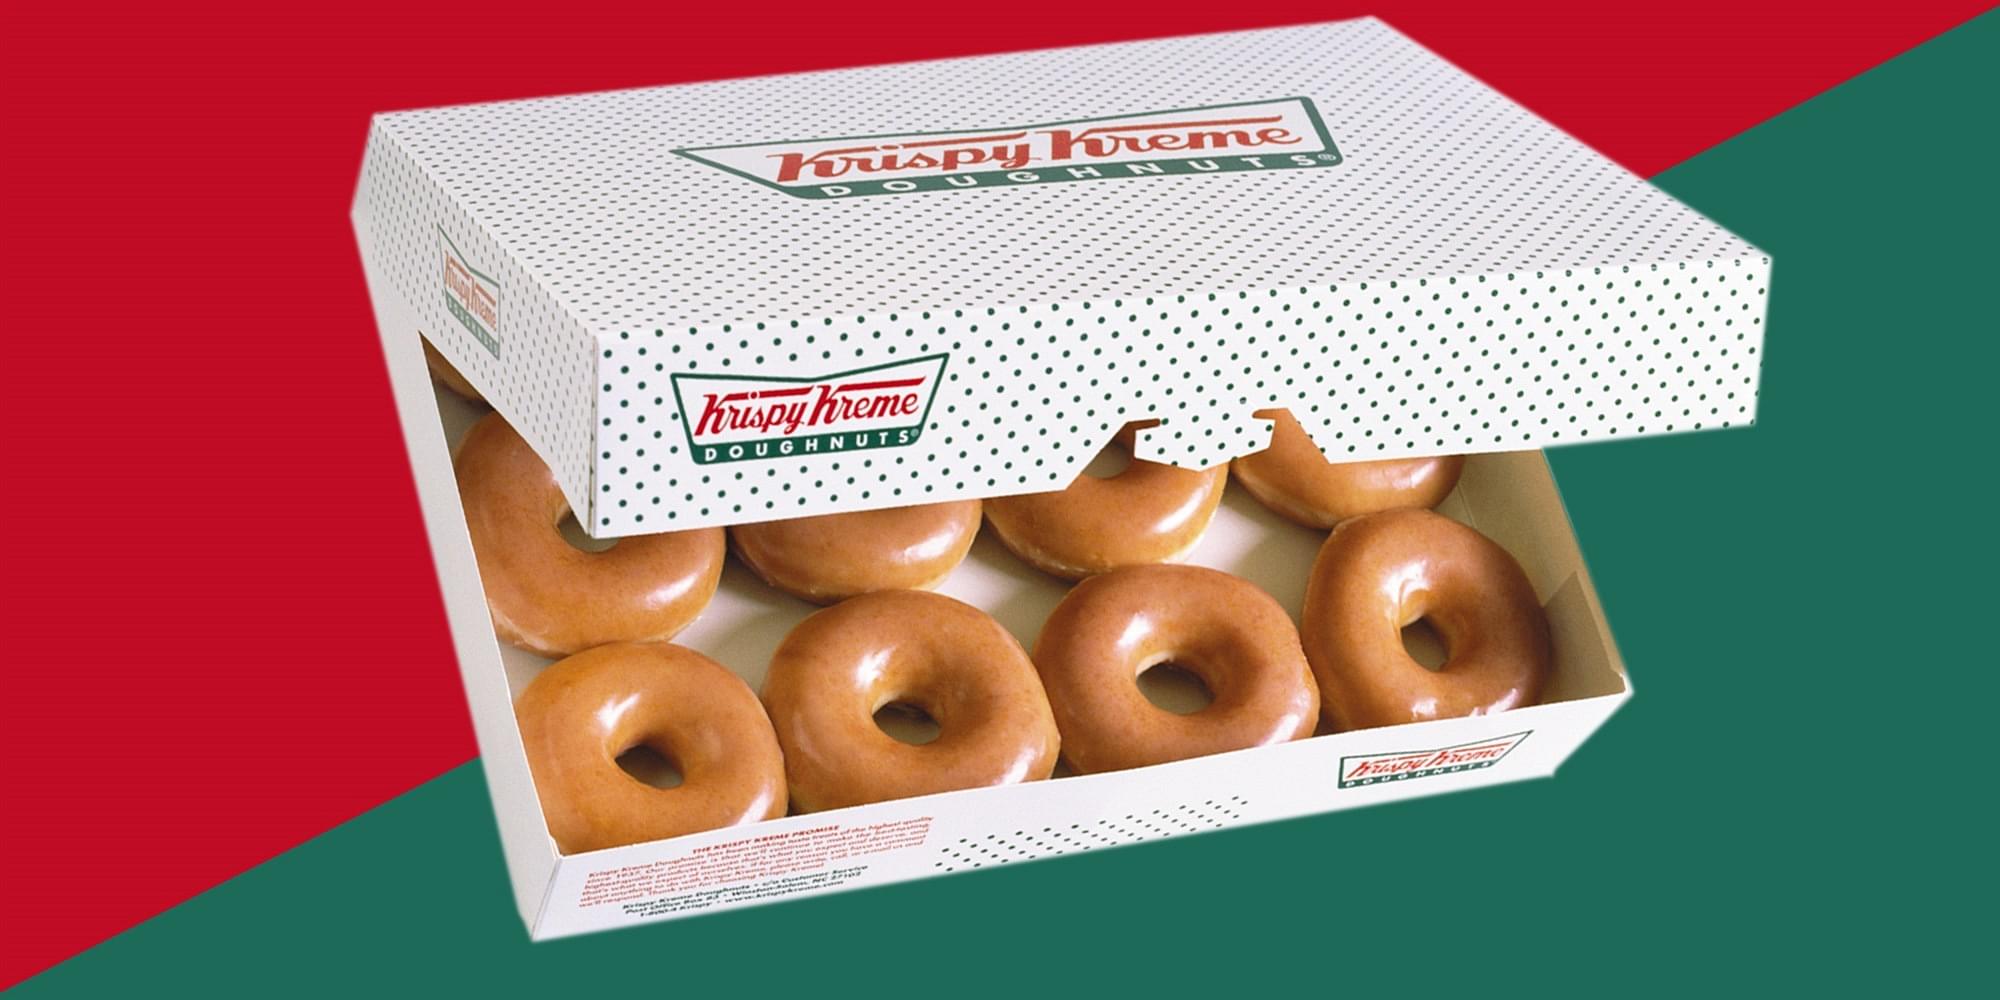 Krispy Kreme InStore Coupons All Season Doughnuts Starting At 1.79